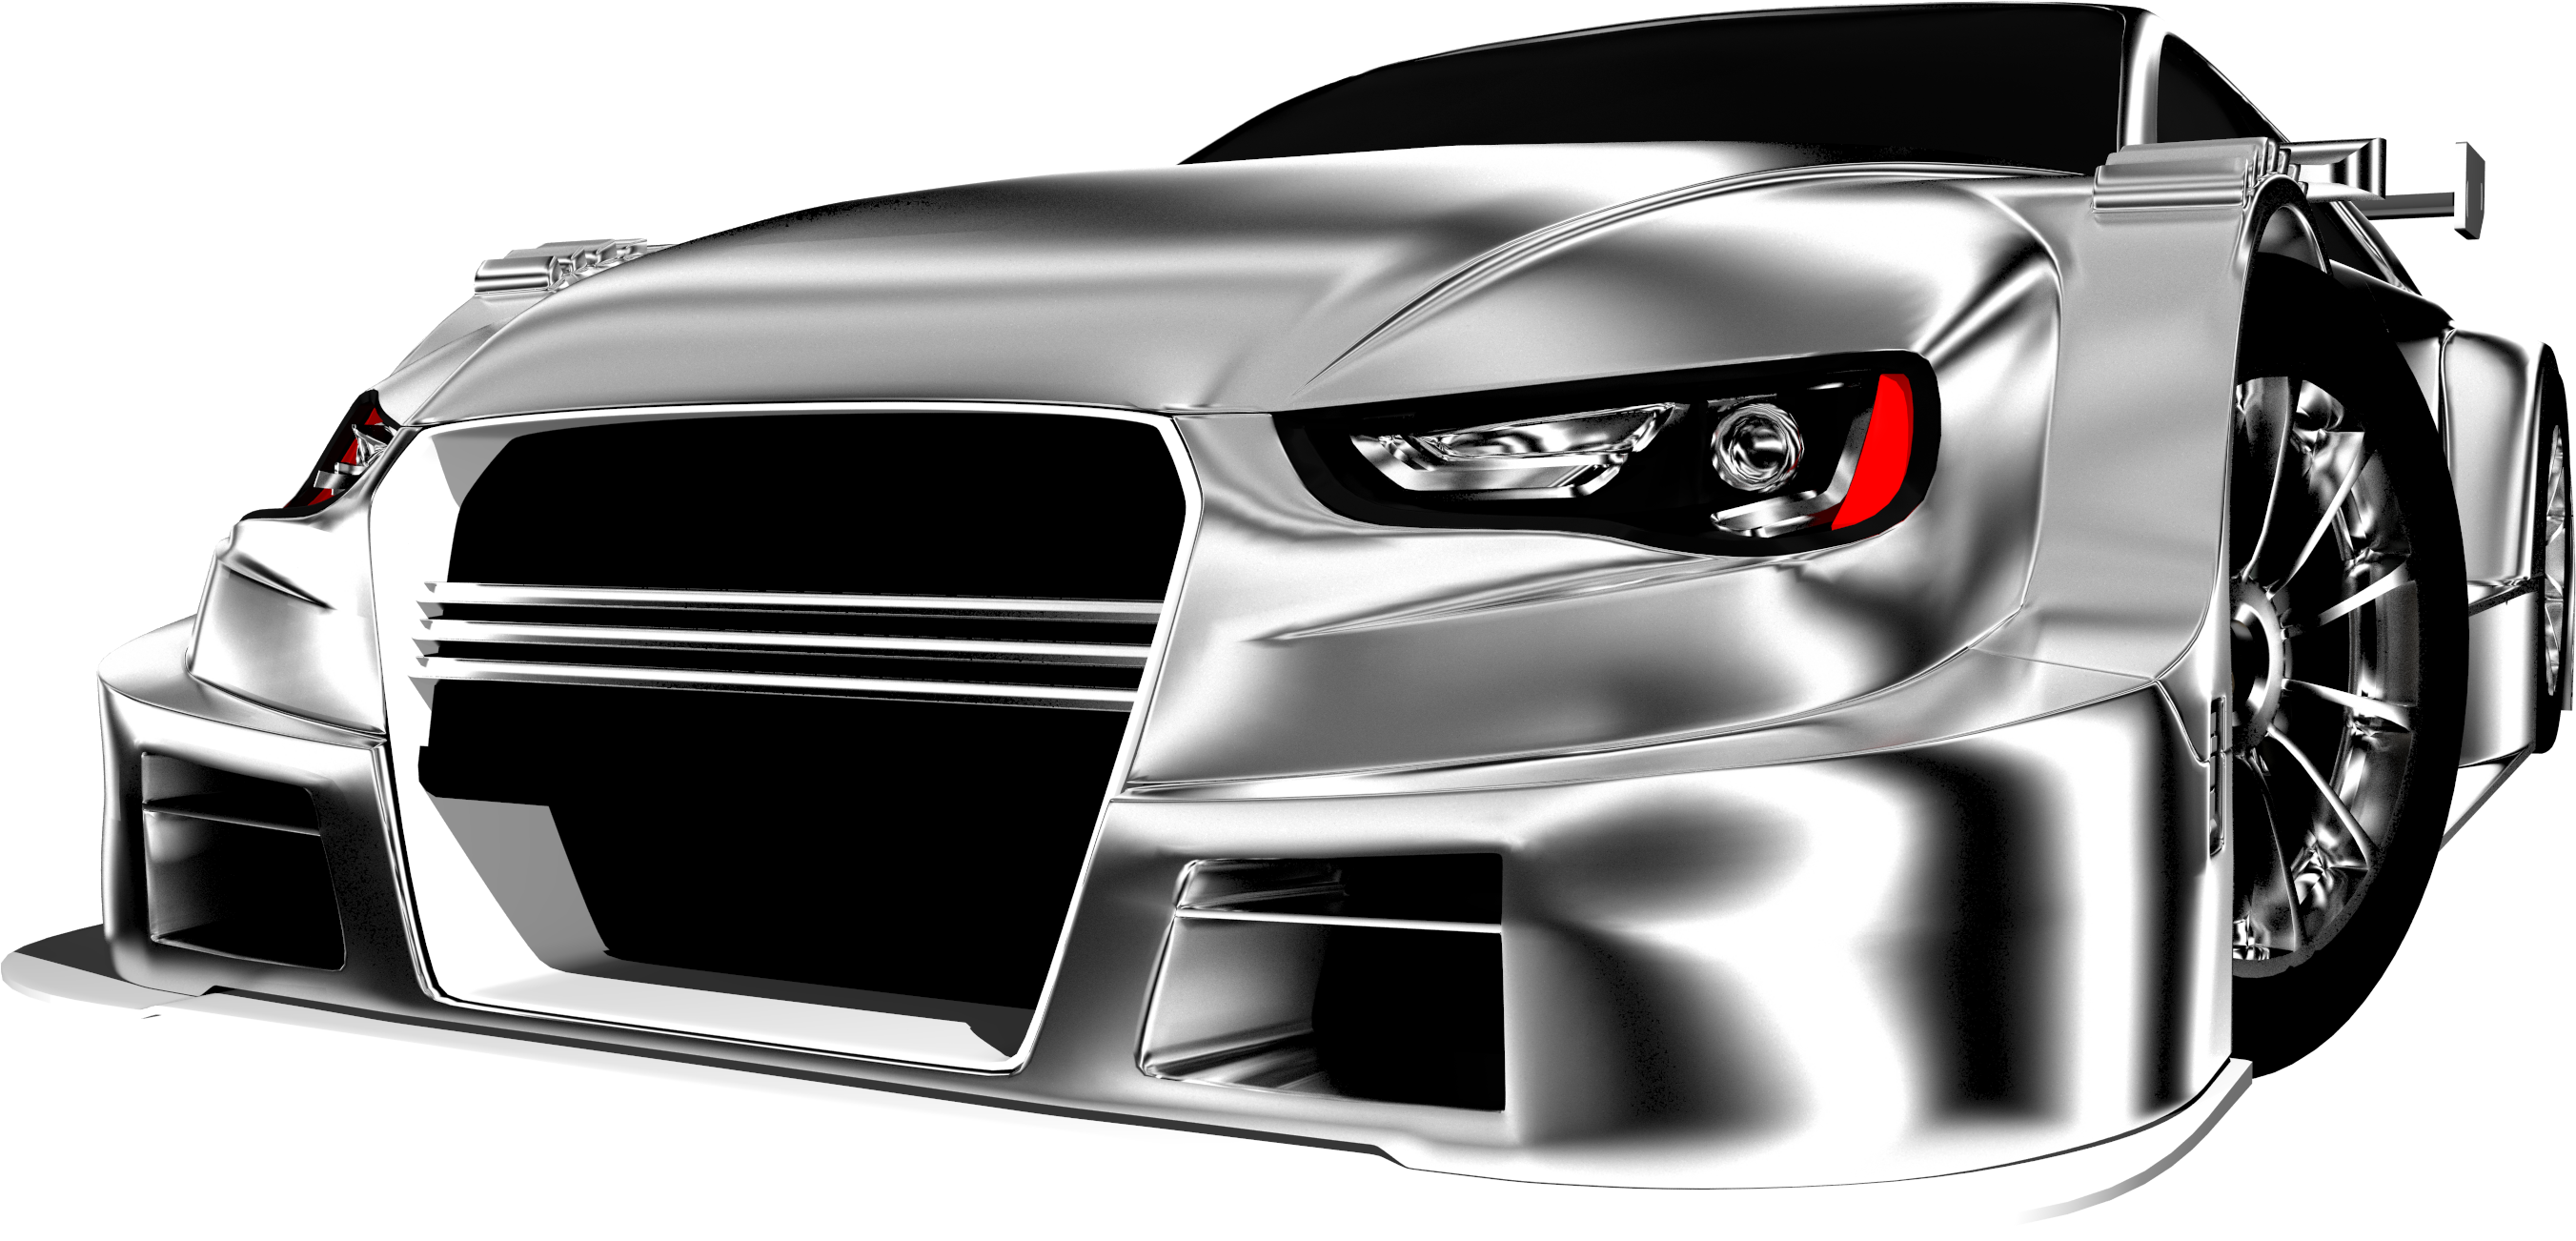 Silver Sports Car Concept Design